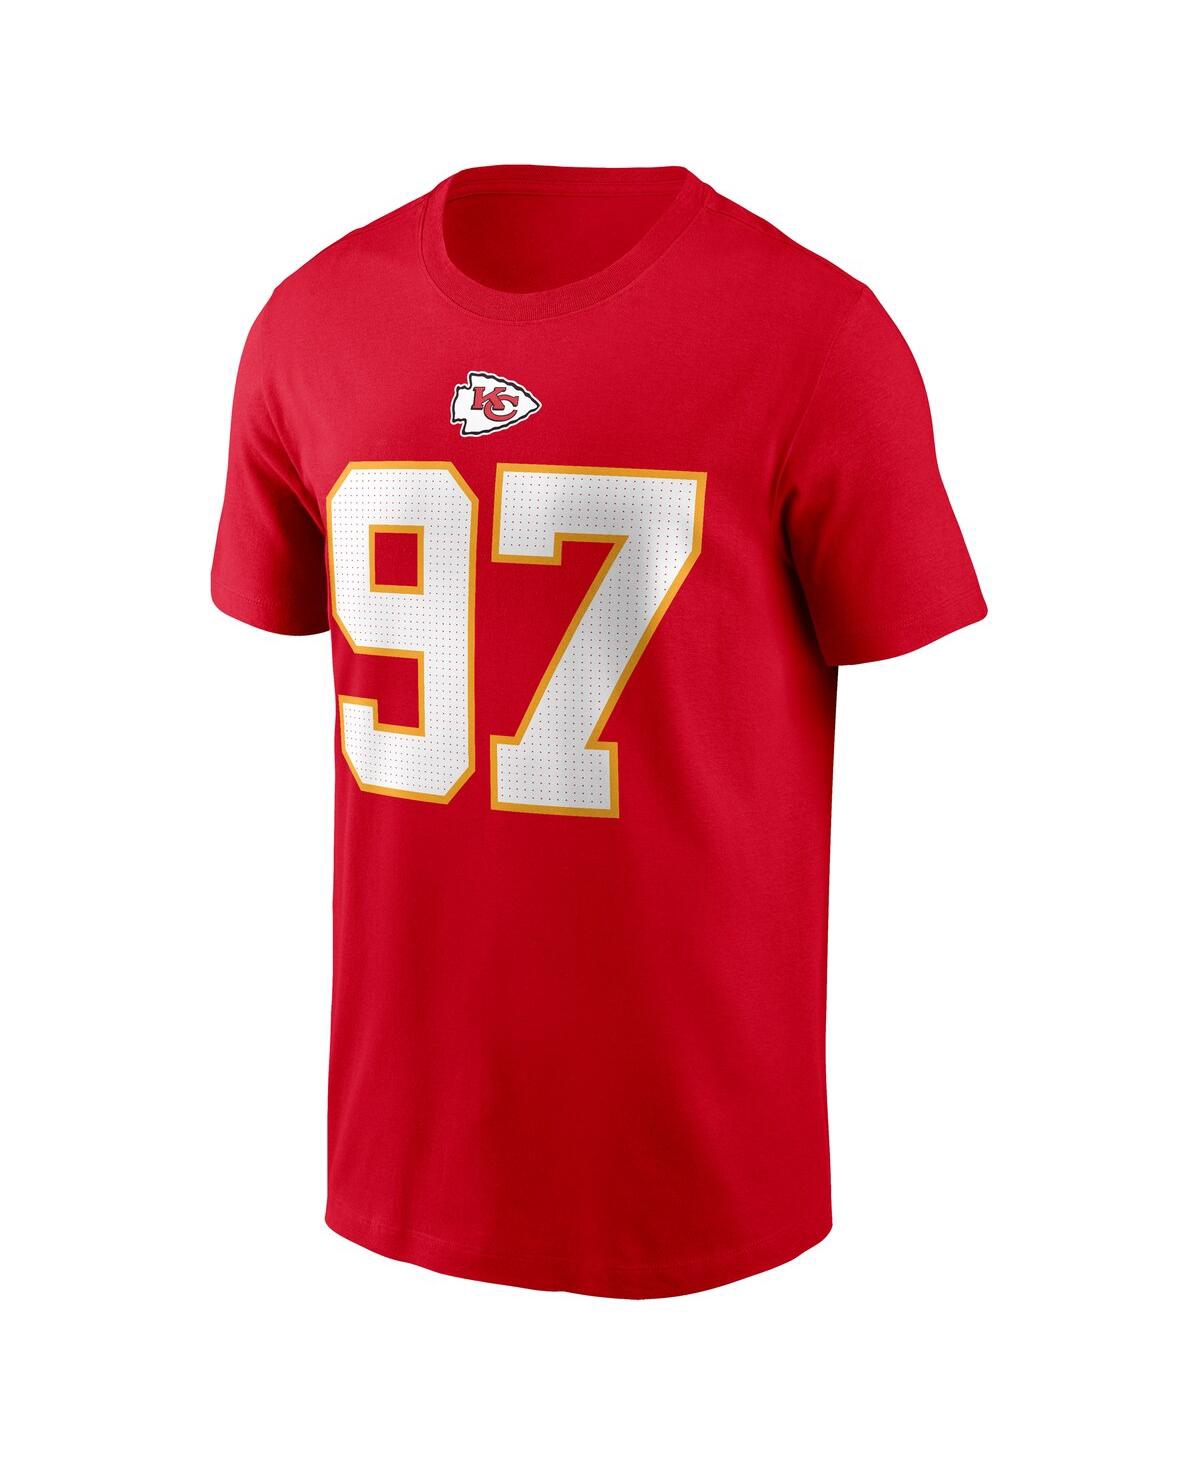 Shop Nike Men's  Felix Anudike-uzomah Red Kansas City Chiefs 2023 Nfl Draft First Round Pick Player Name A